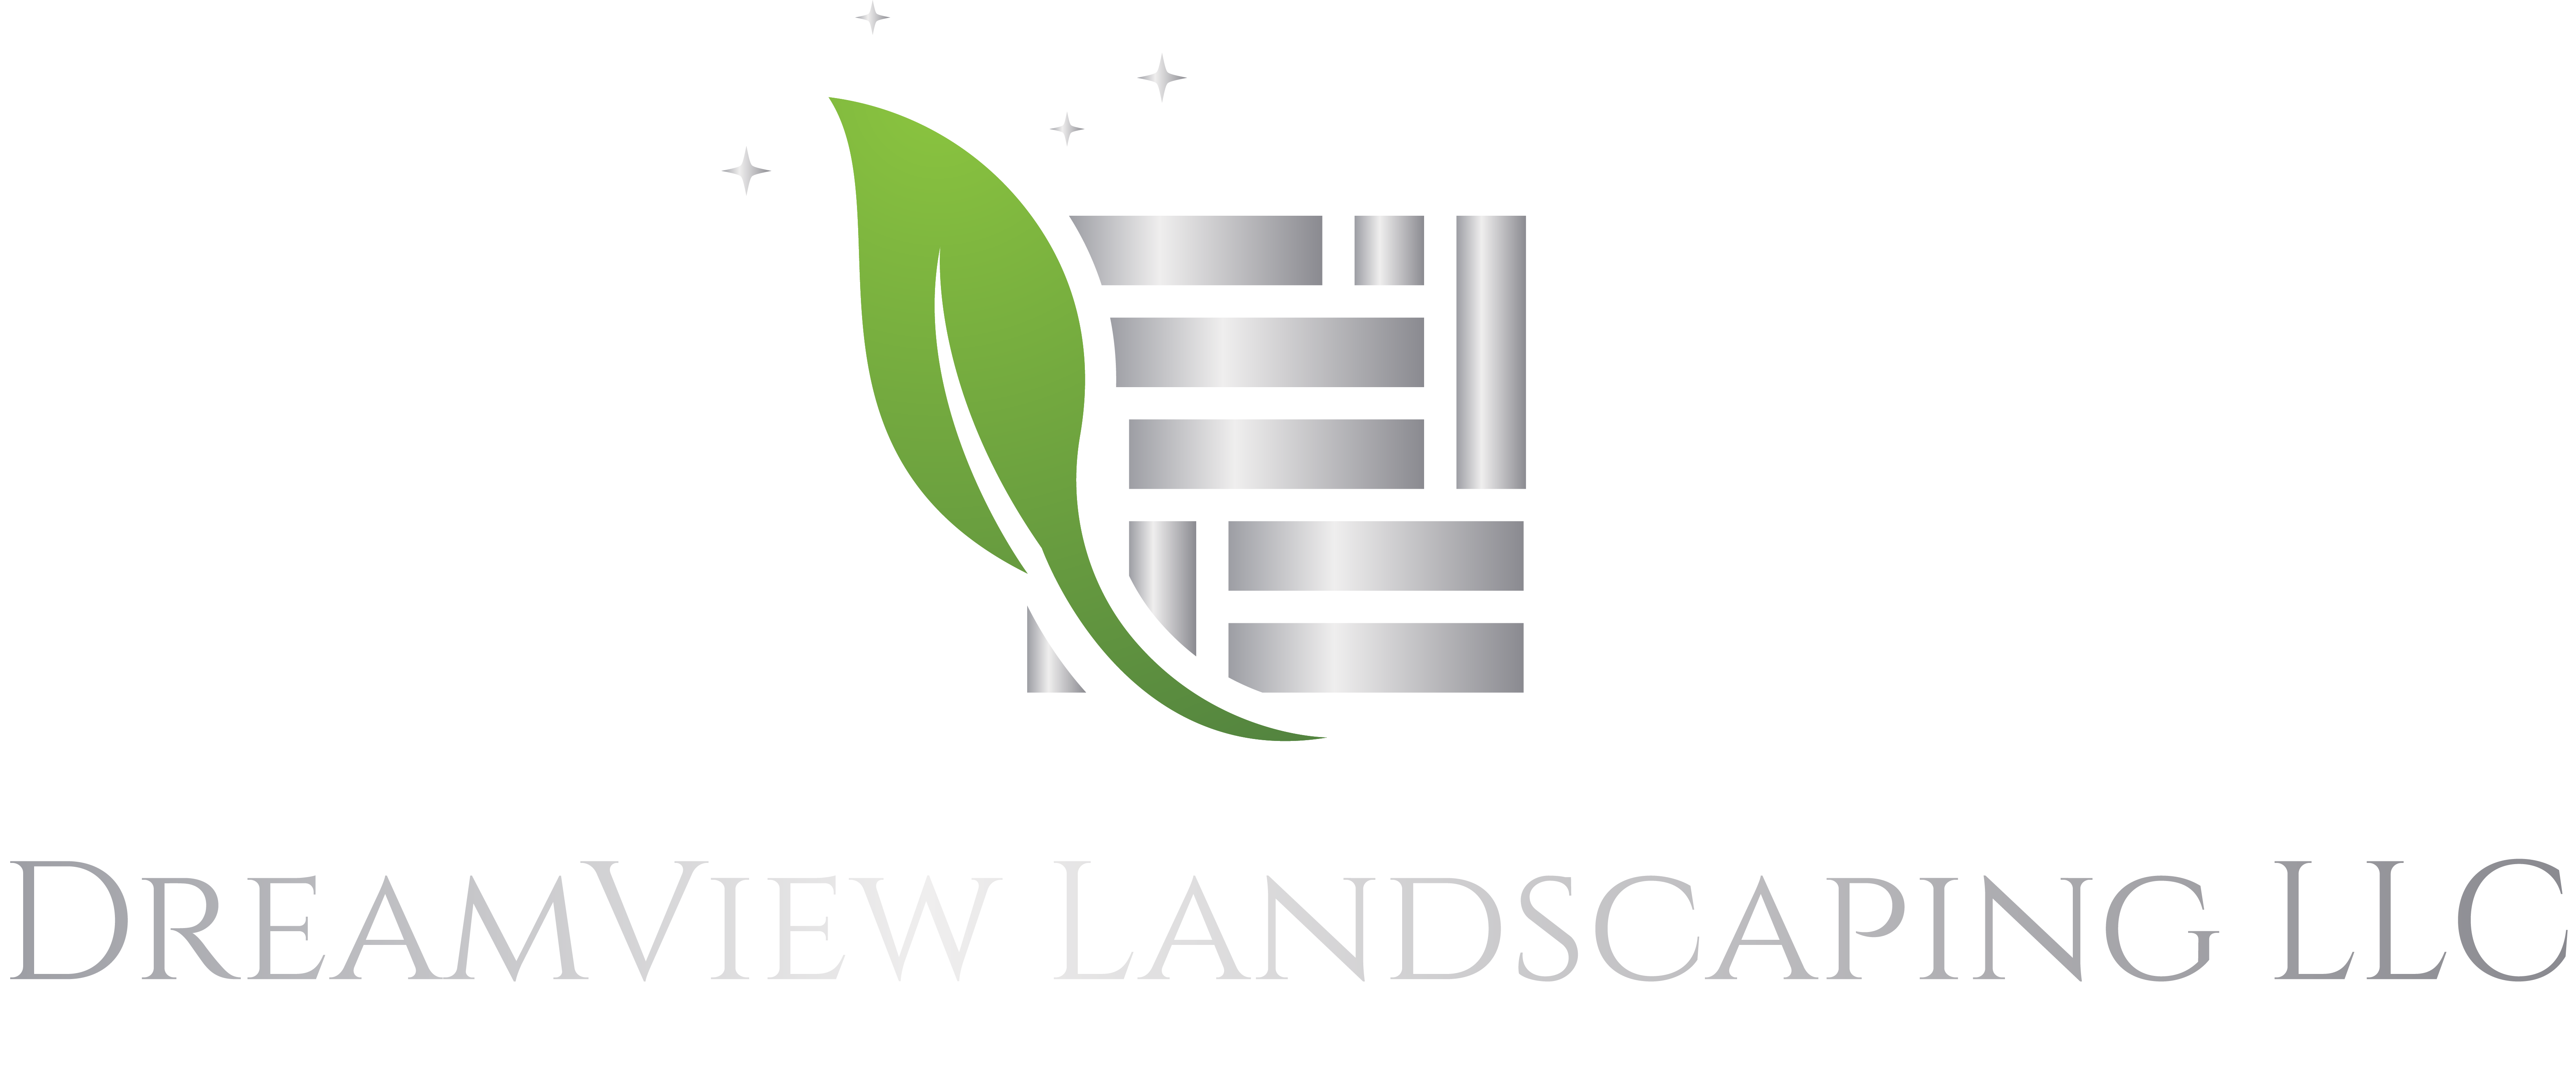 Dreamview Landscaping, LLC Logo